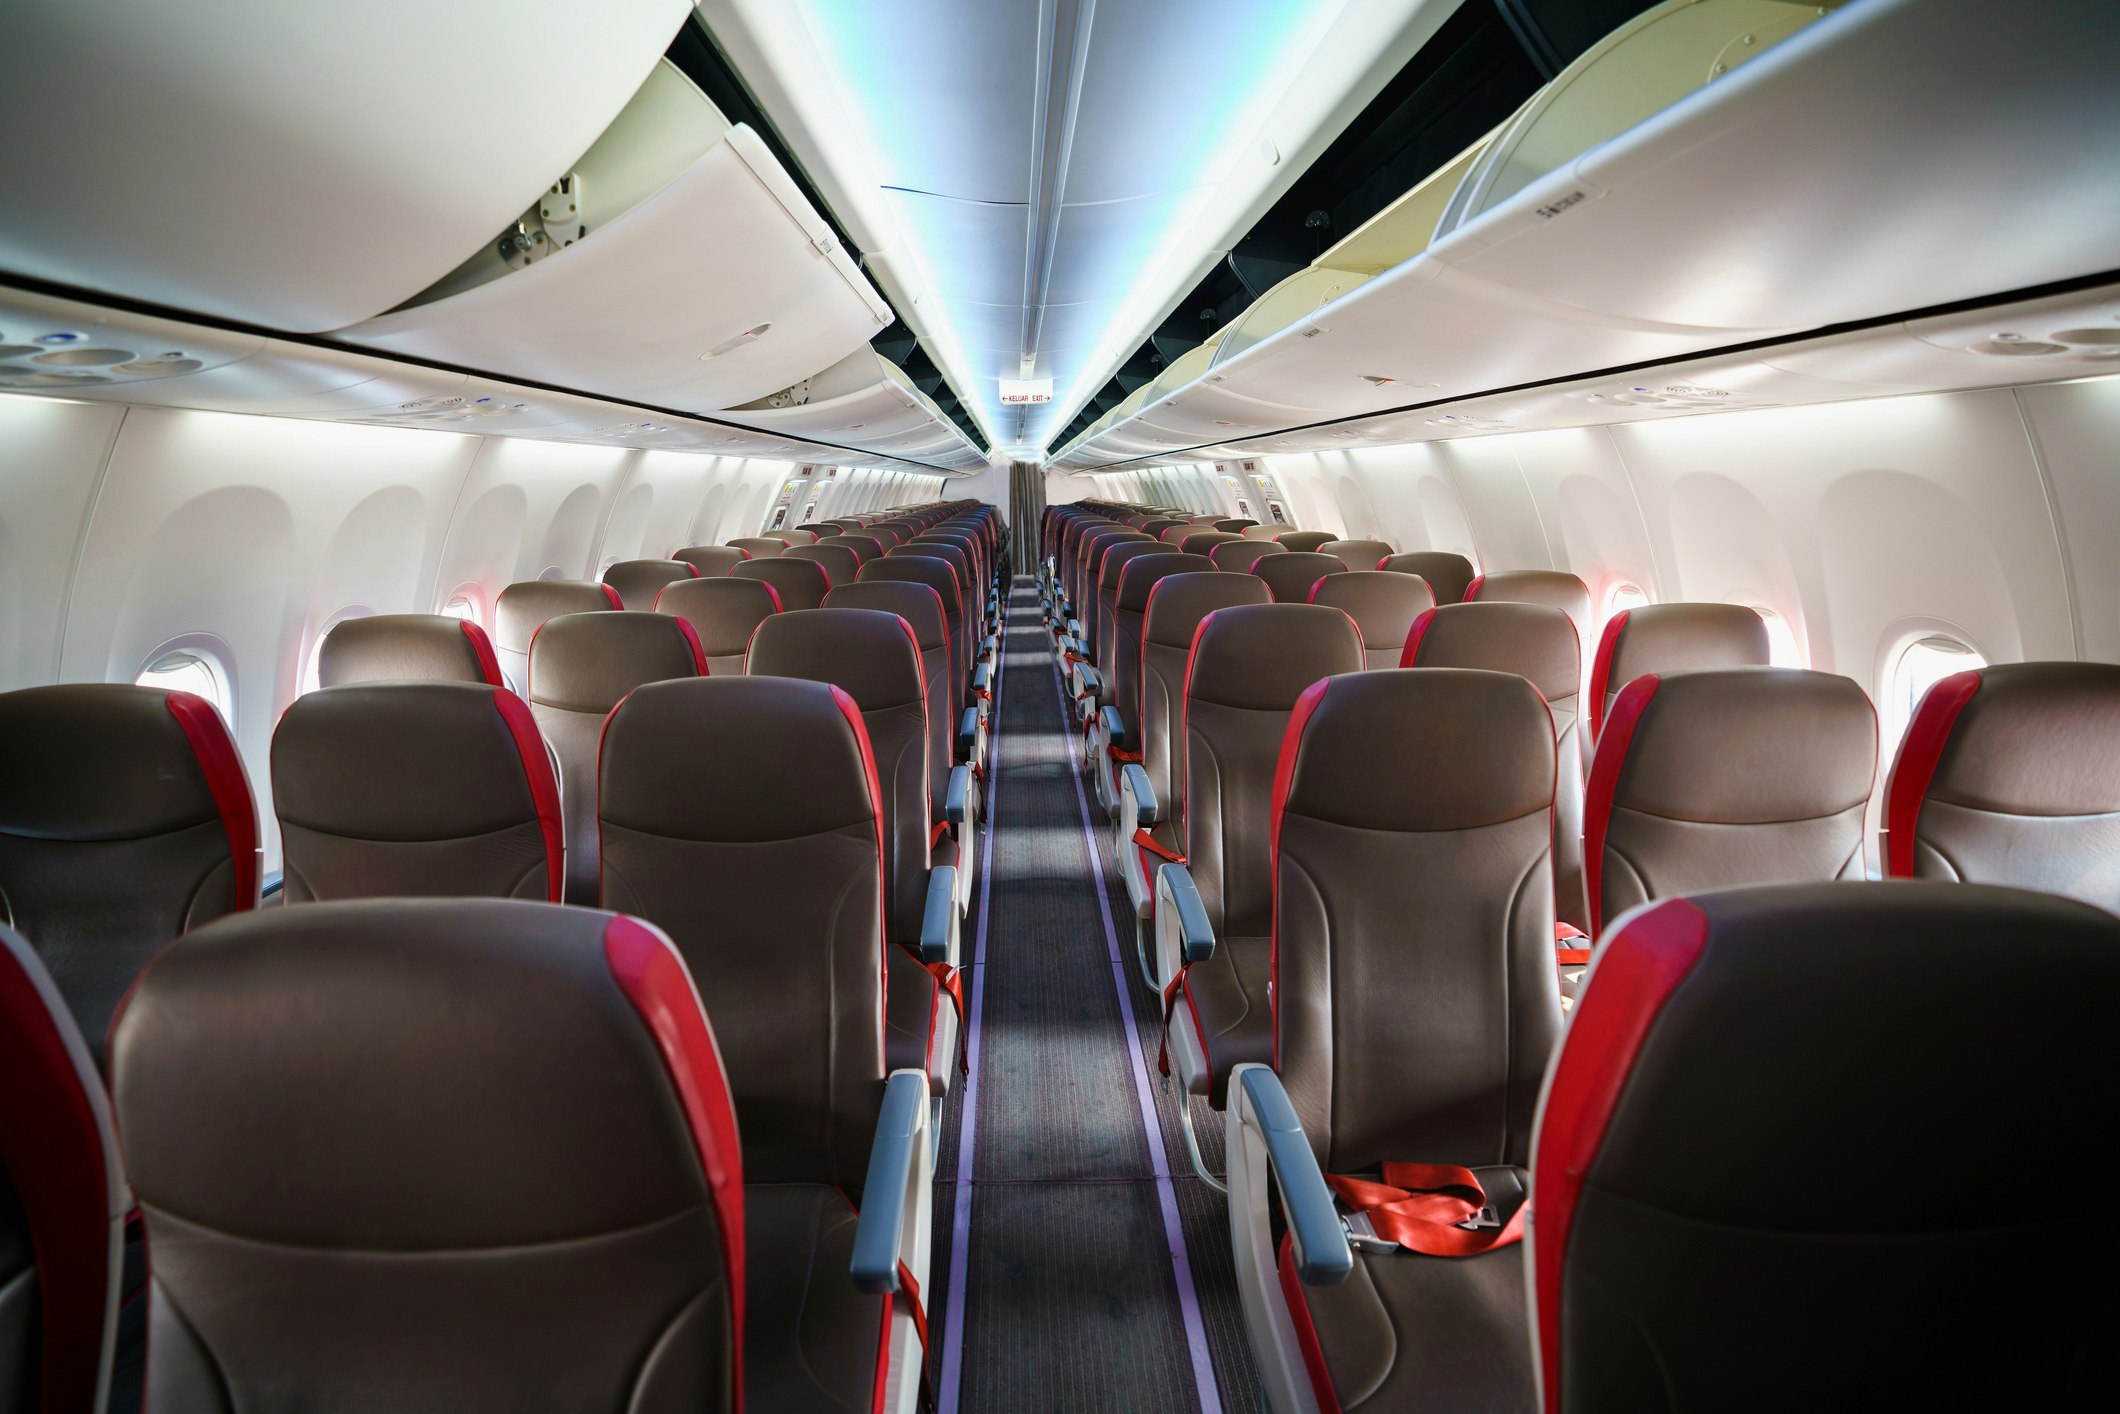 Travel News - Inside airplane view